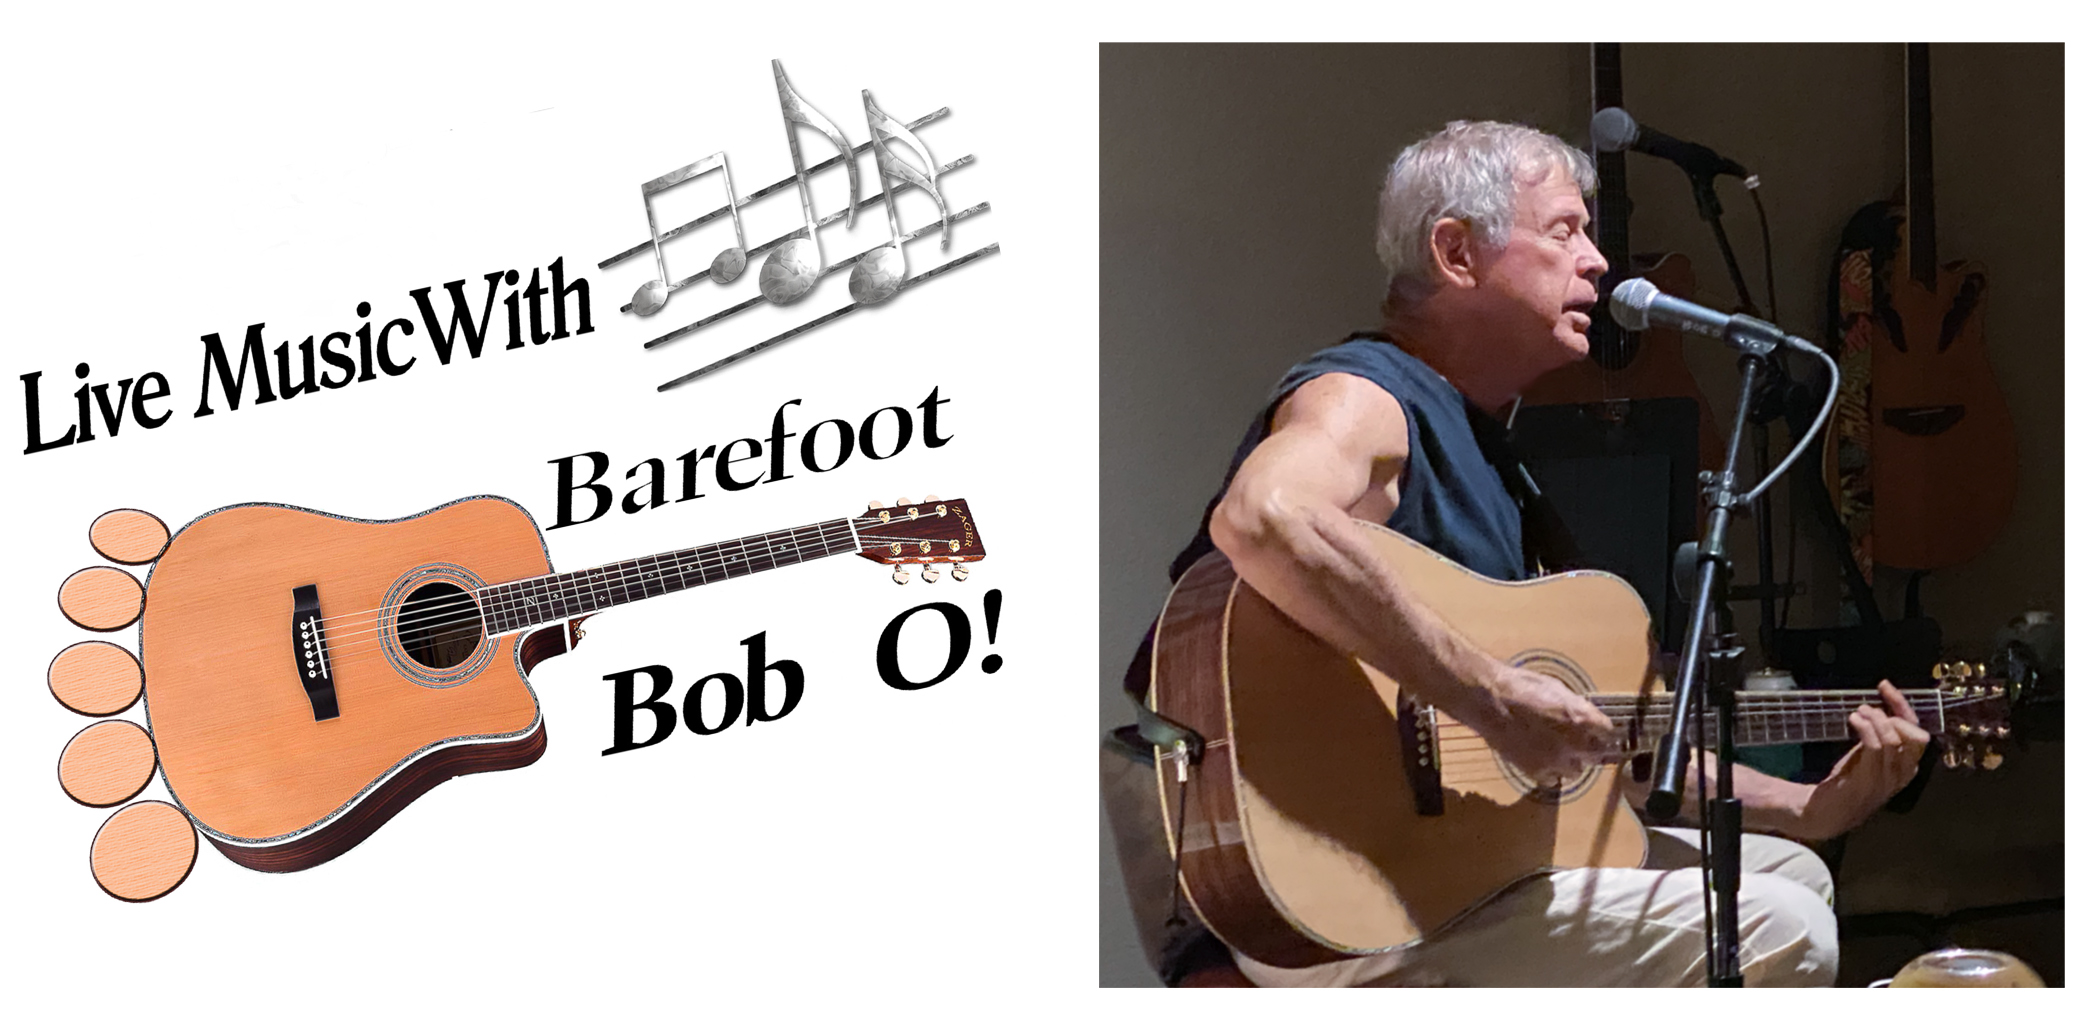 Live music with Barefoot Bob O